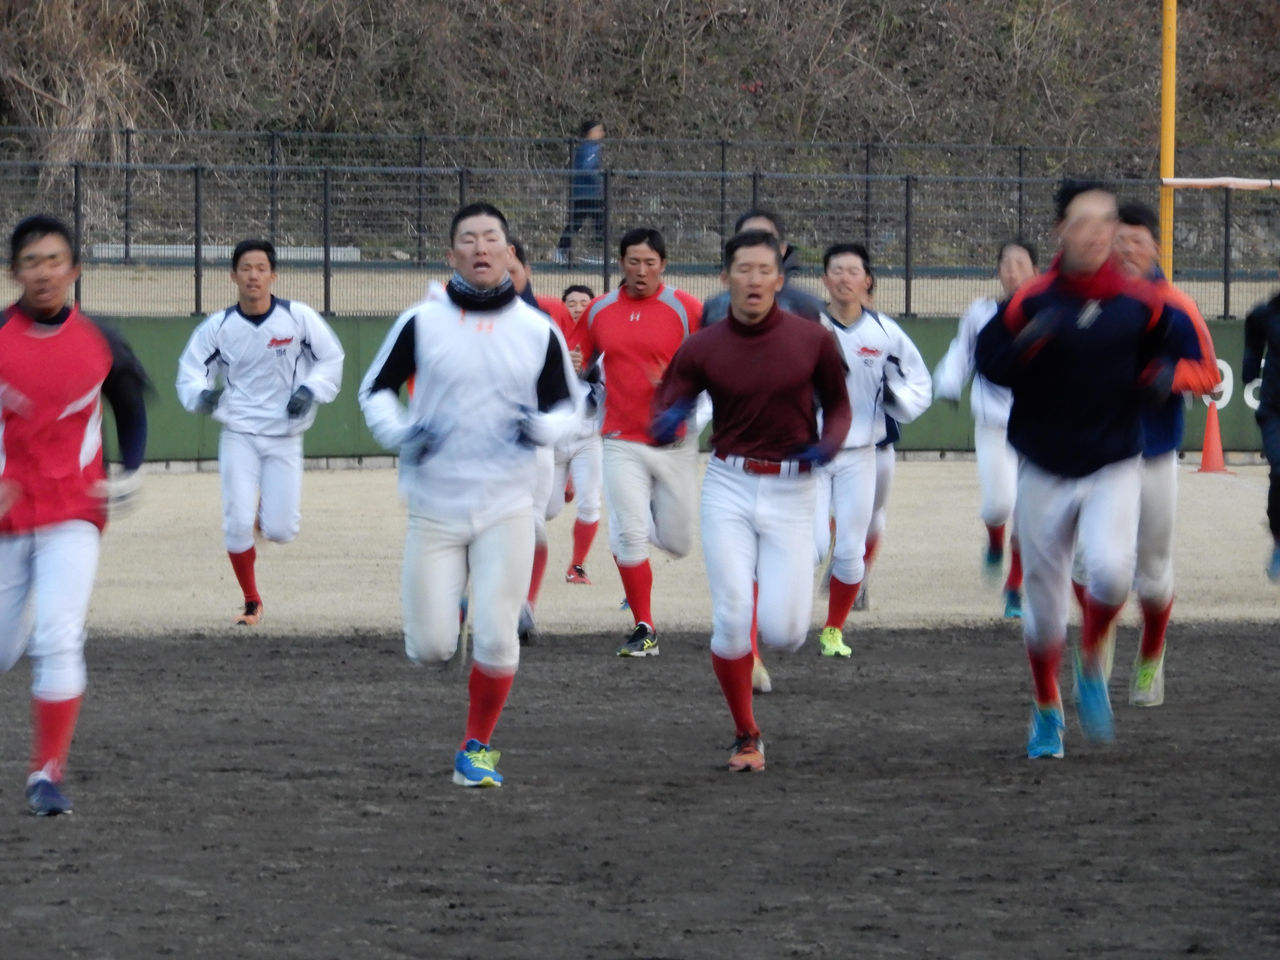 大分キャンプ10日目 流通経済大学硬式野球部official Blog